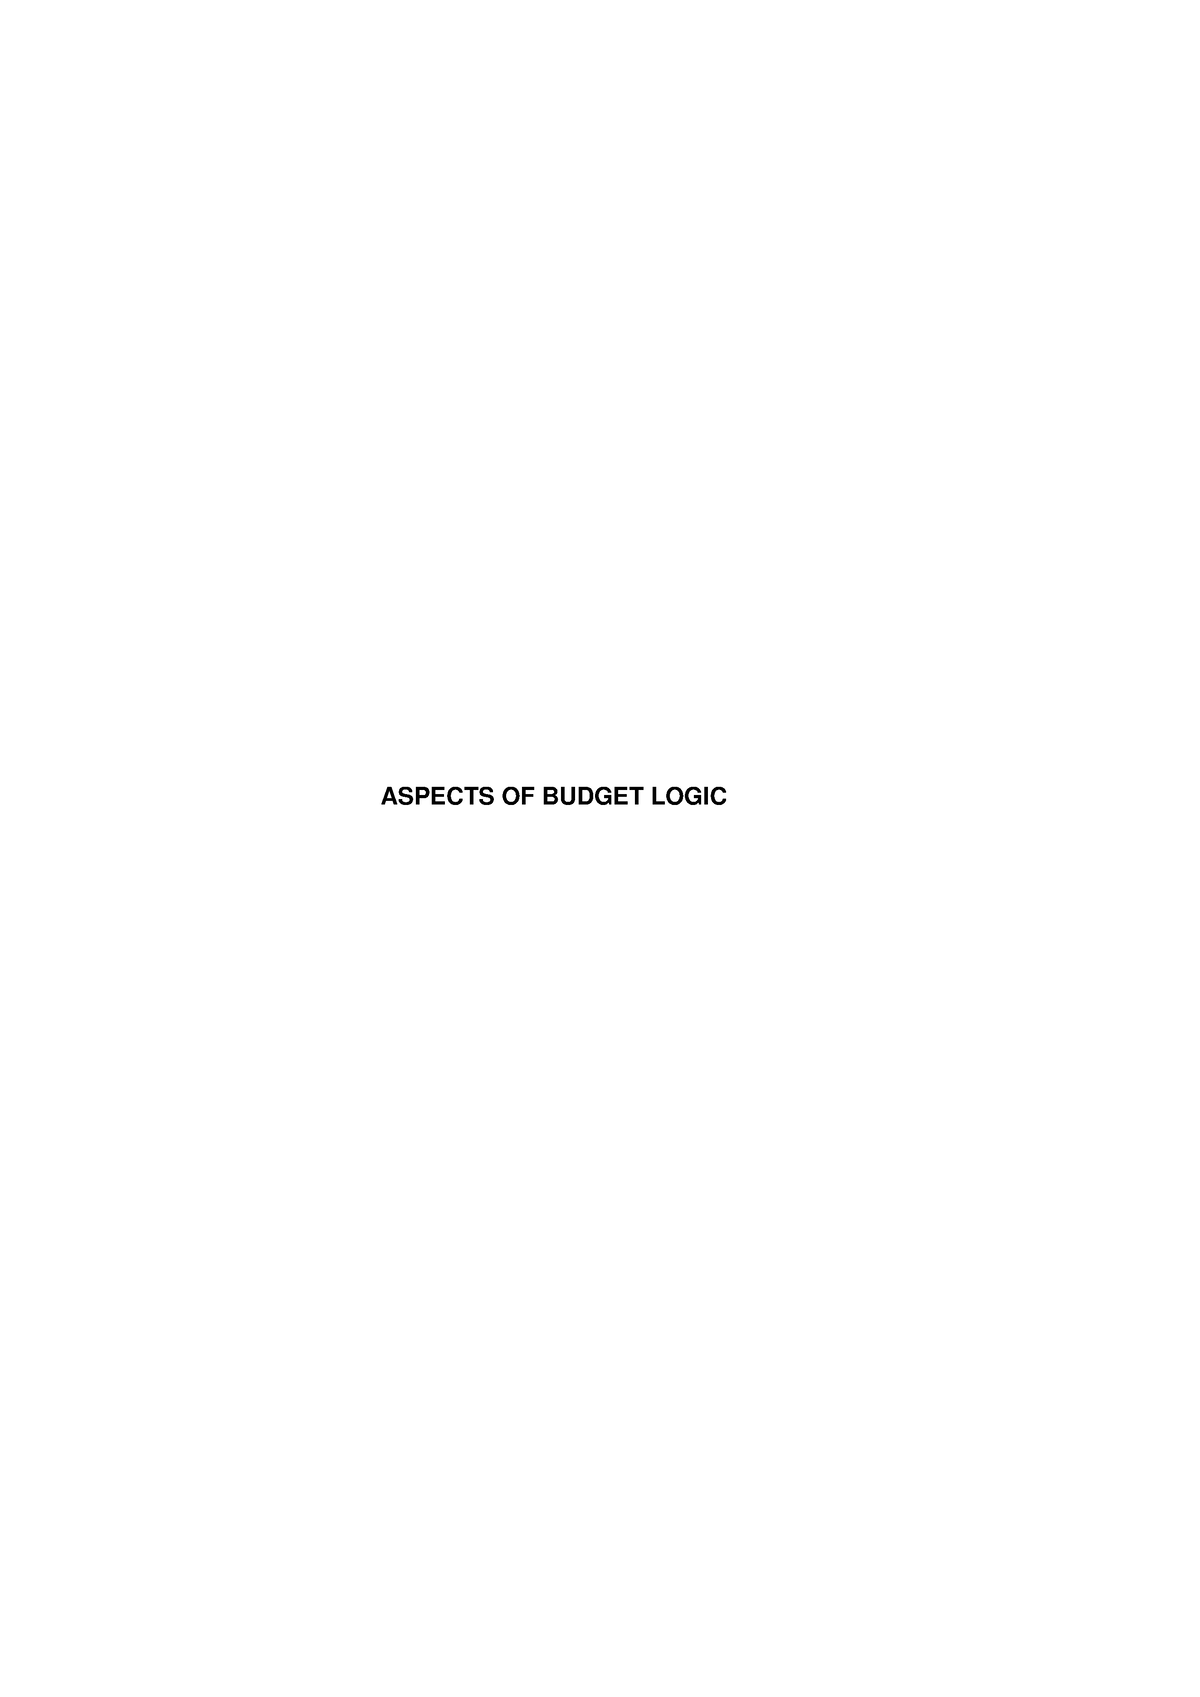 Assessment 05 - Aspects of budget logic - ASPECTS OF BUDGET LOGIC TABLE ...